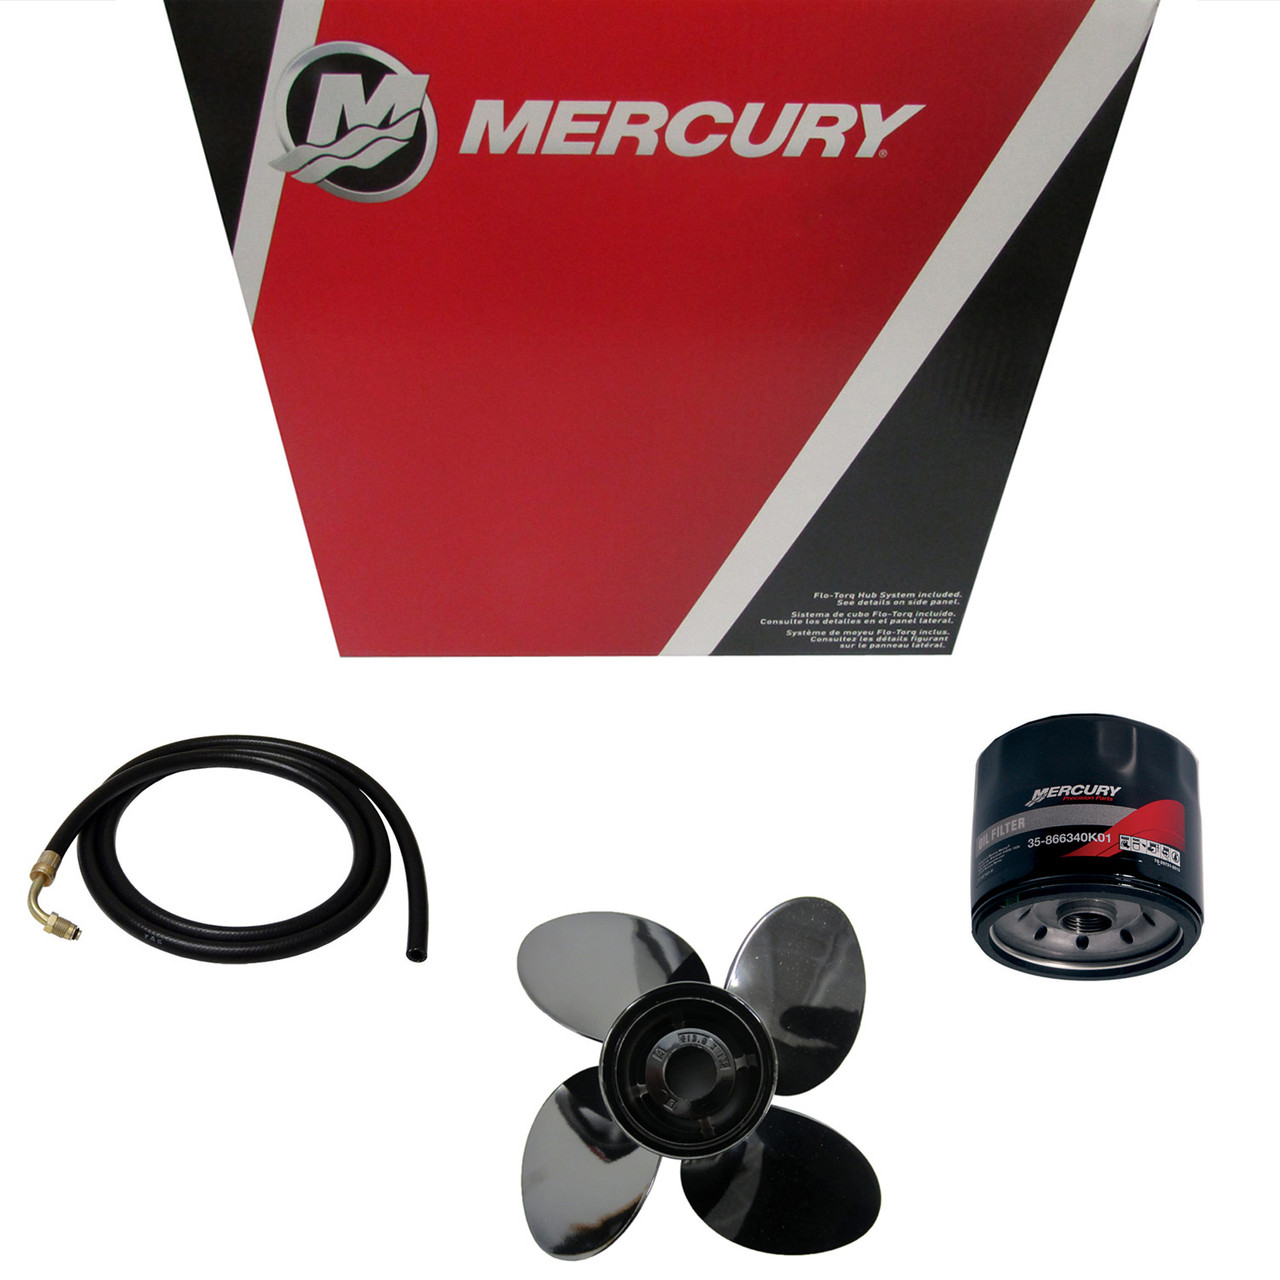 Mercury Marine / Mercruiser New OEM Qcii Steer Cable, 64-851621A16